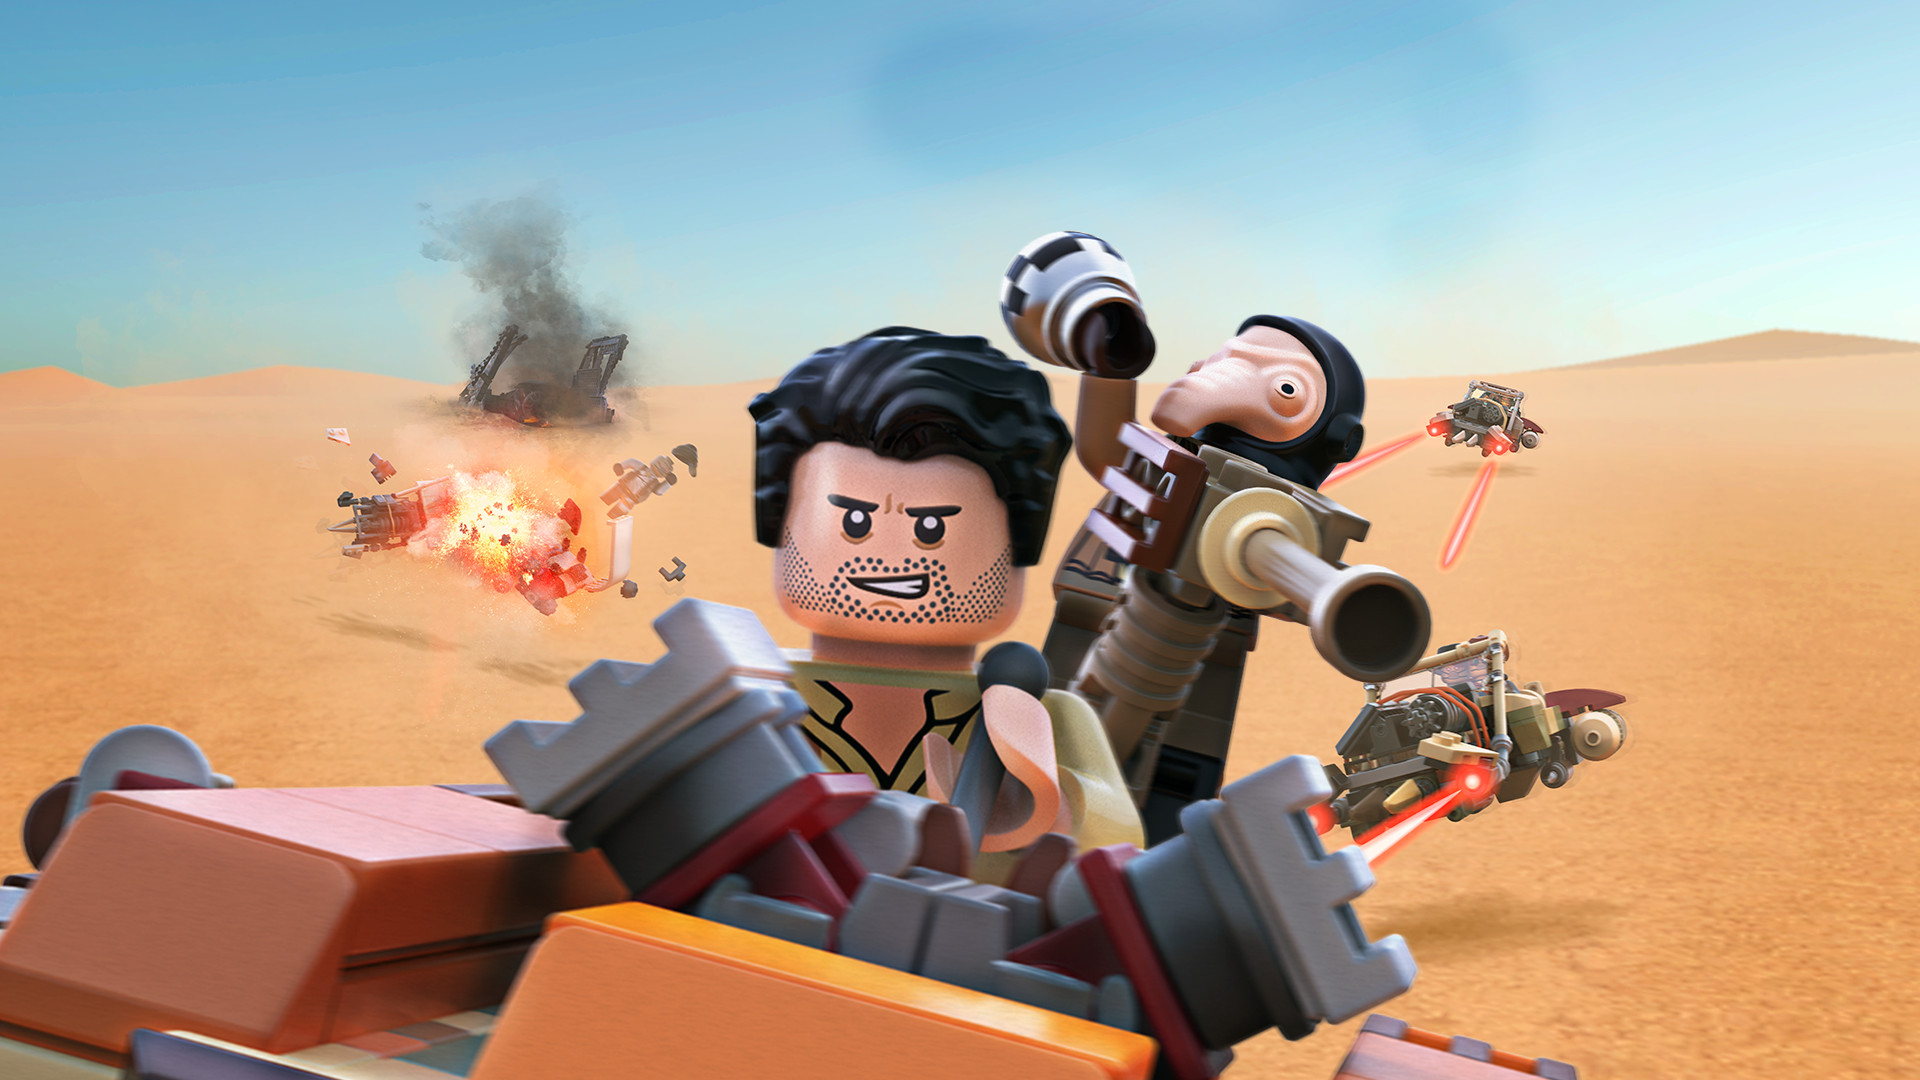 LEGO Star Wars: The Force Awakens - Jakku: Poe's Quest for Survival DLC Steam CD Key 2.25 usd